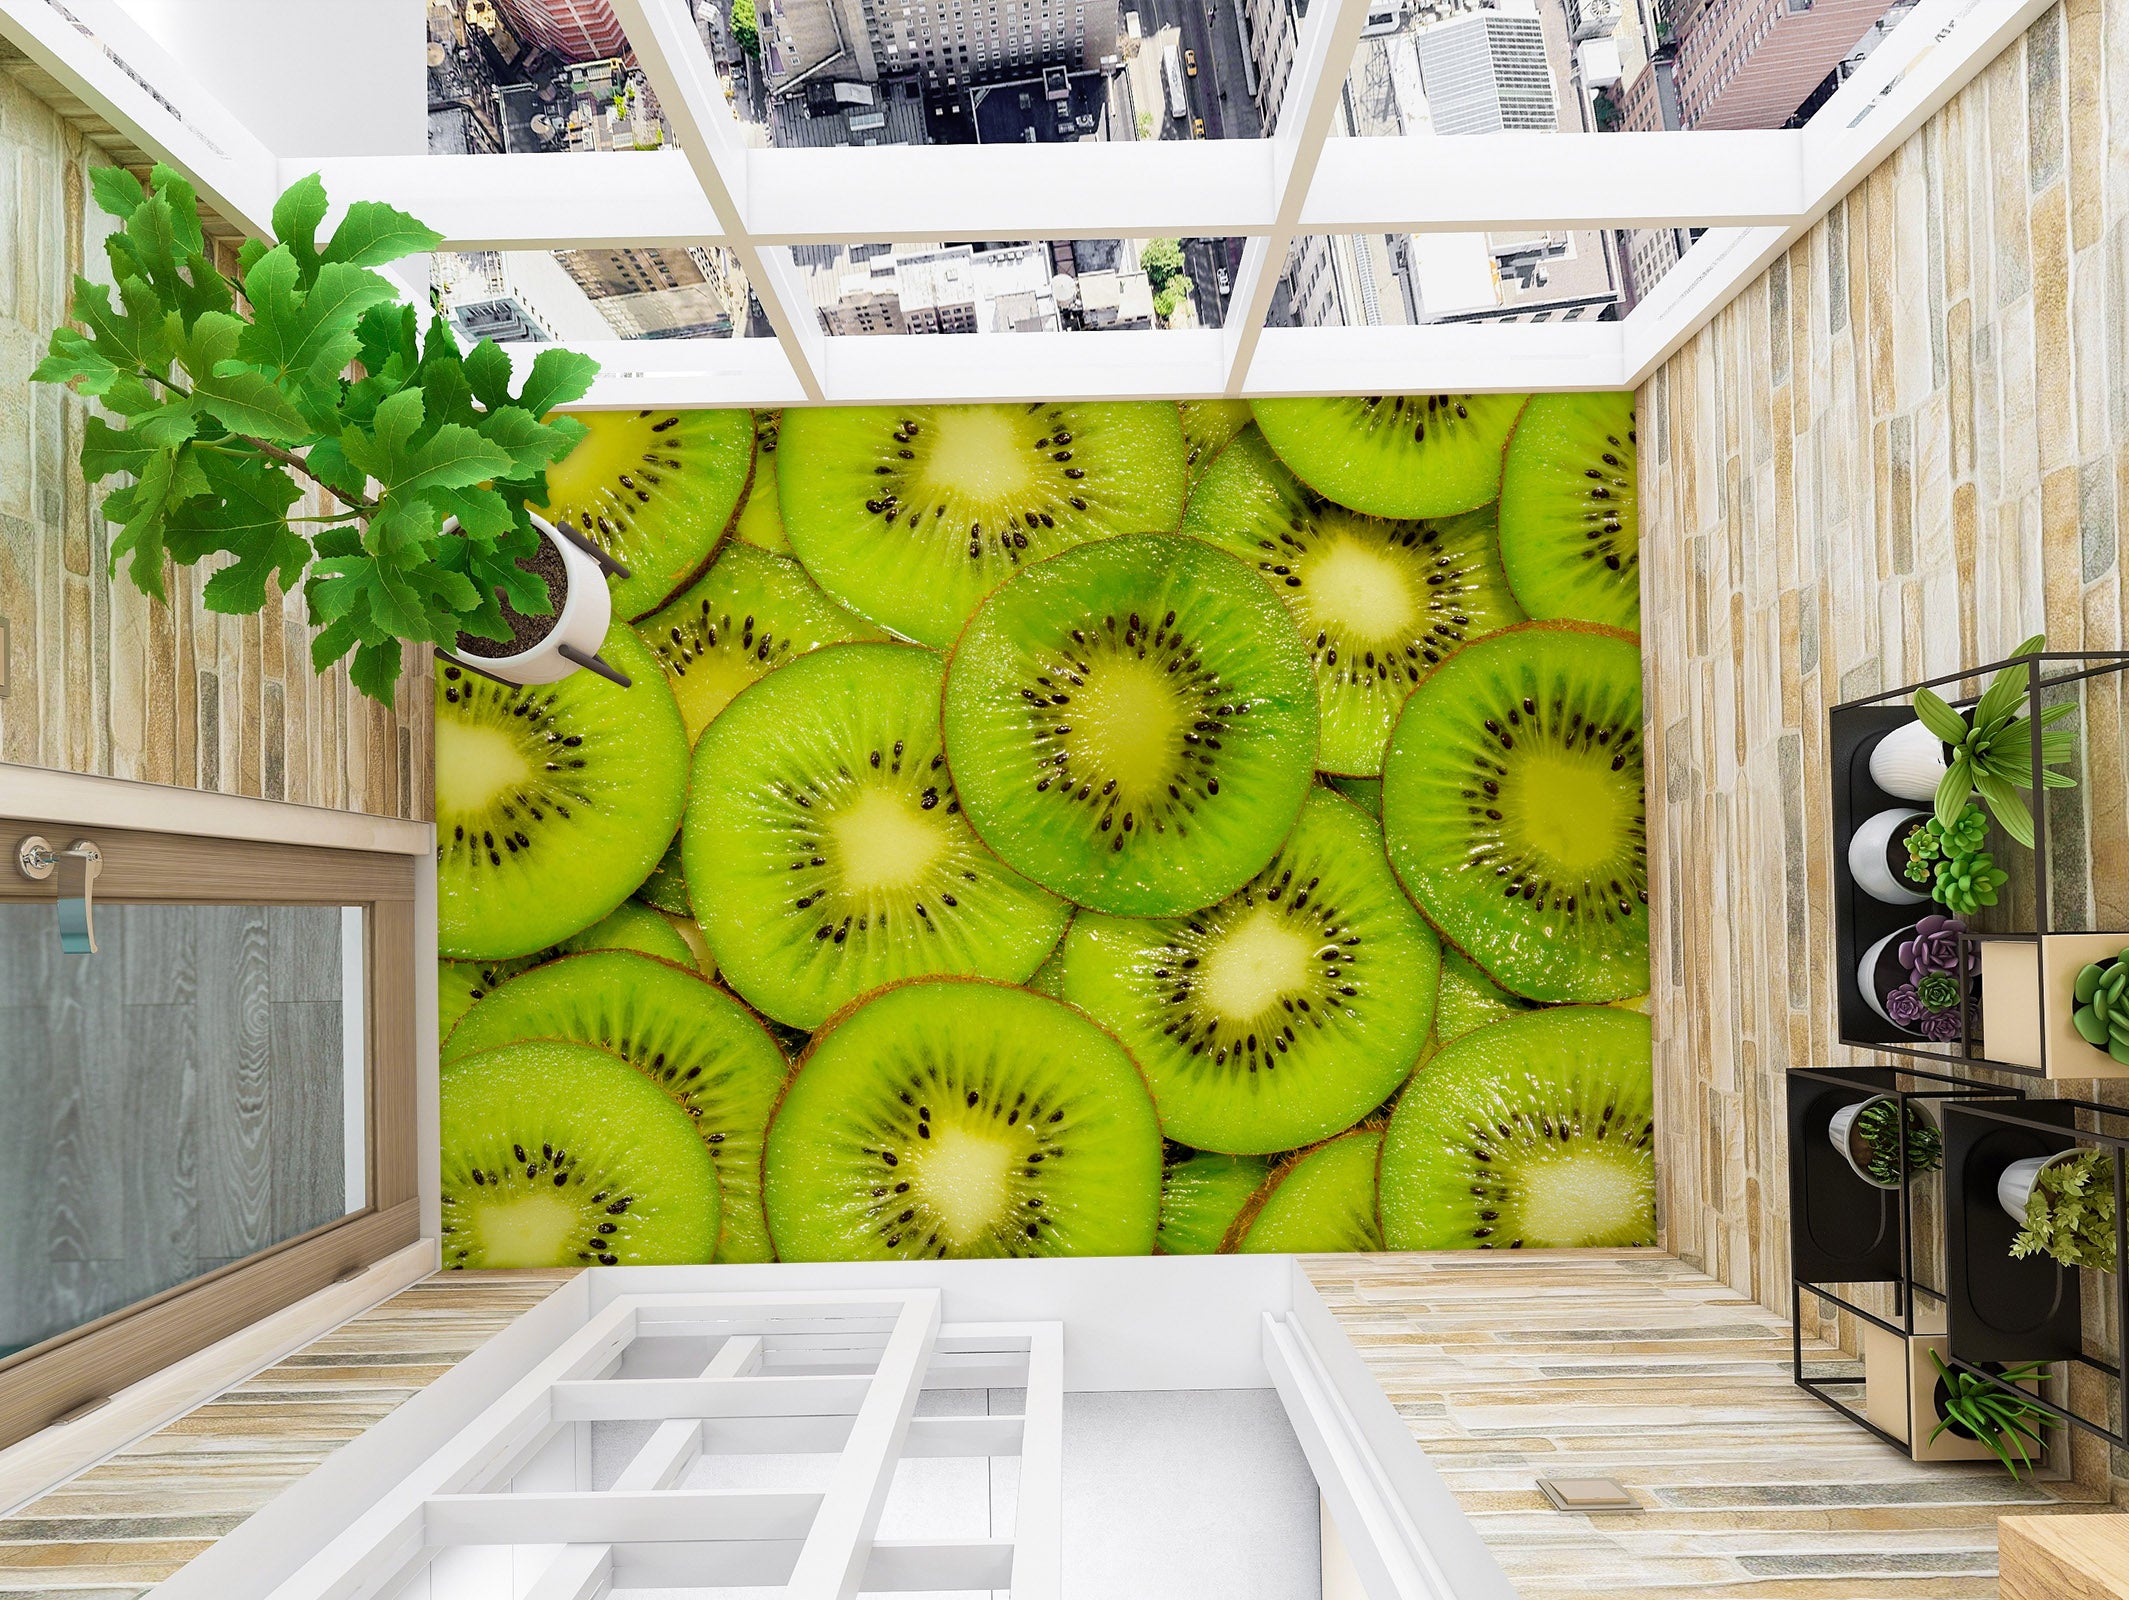 3D Green Kiwis 1406 Floor Mural  Wallpaper Murals Self-Adhesive Removable Print Epoxy